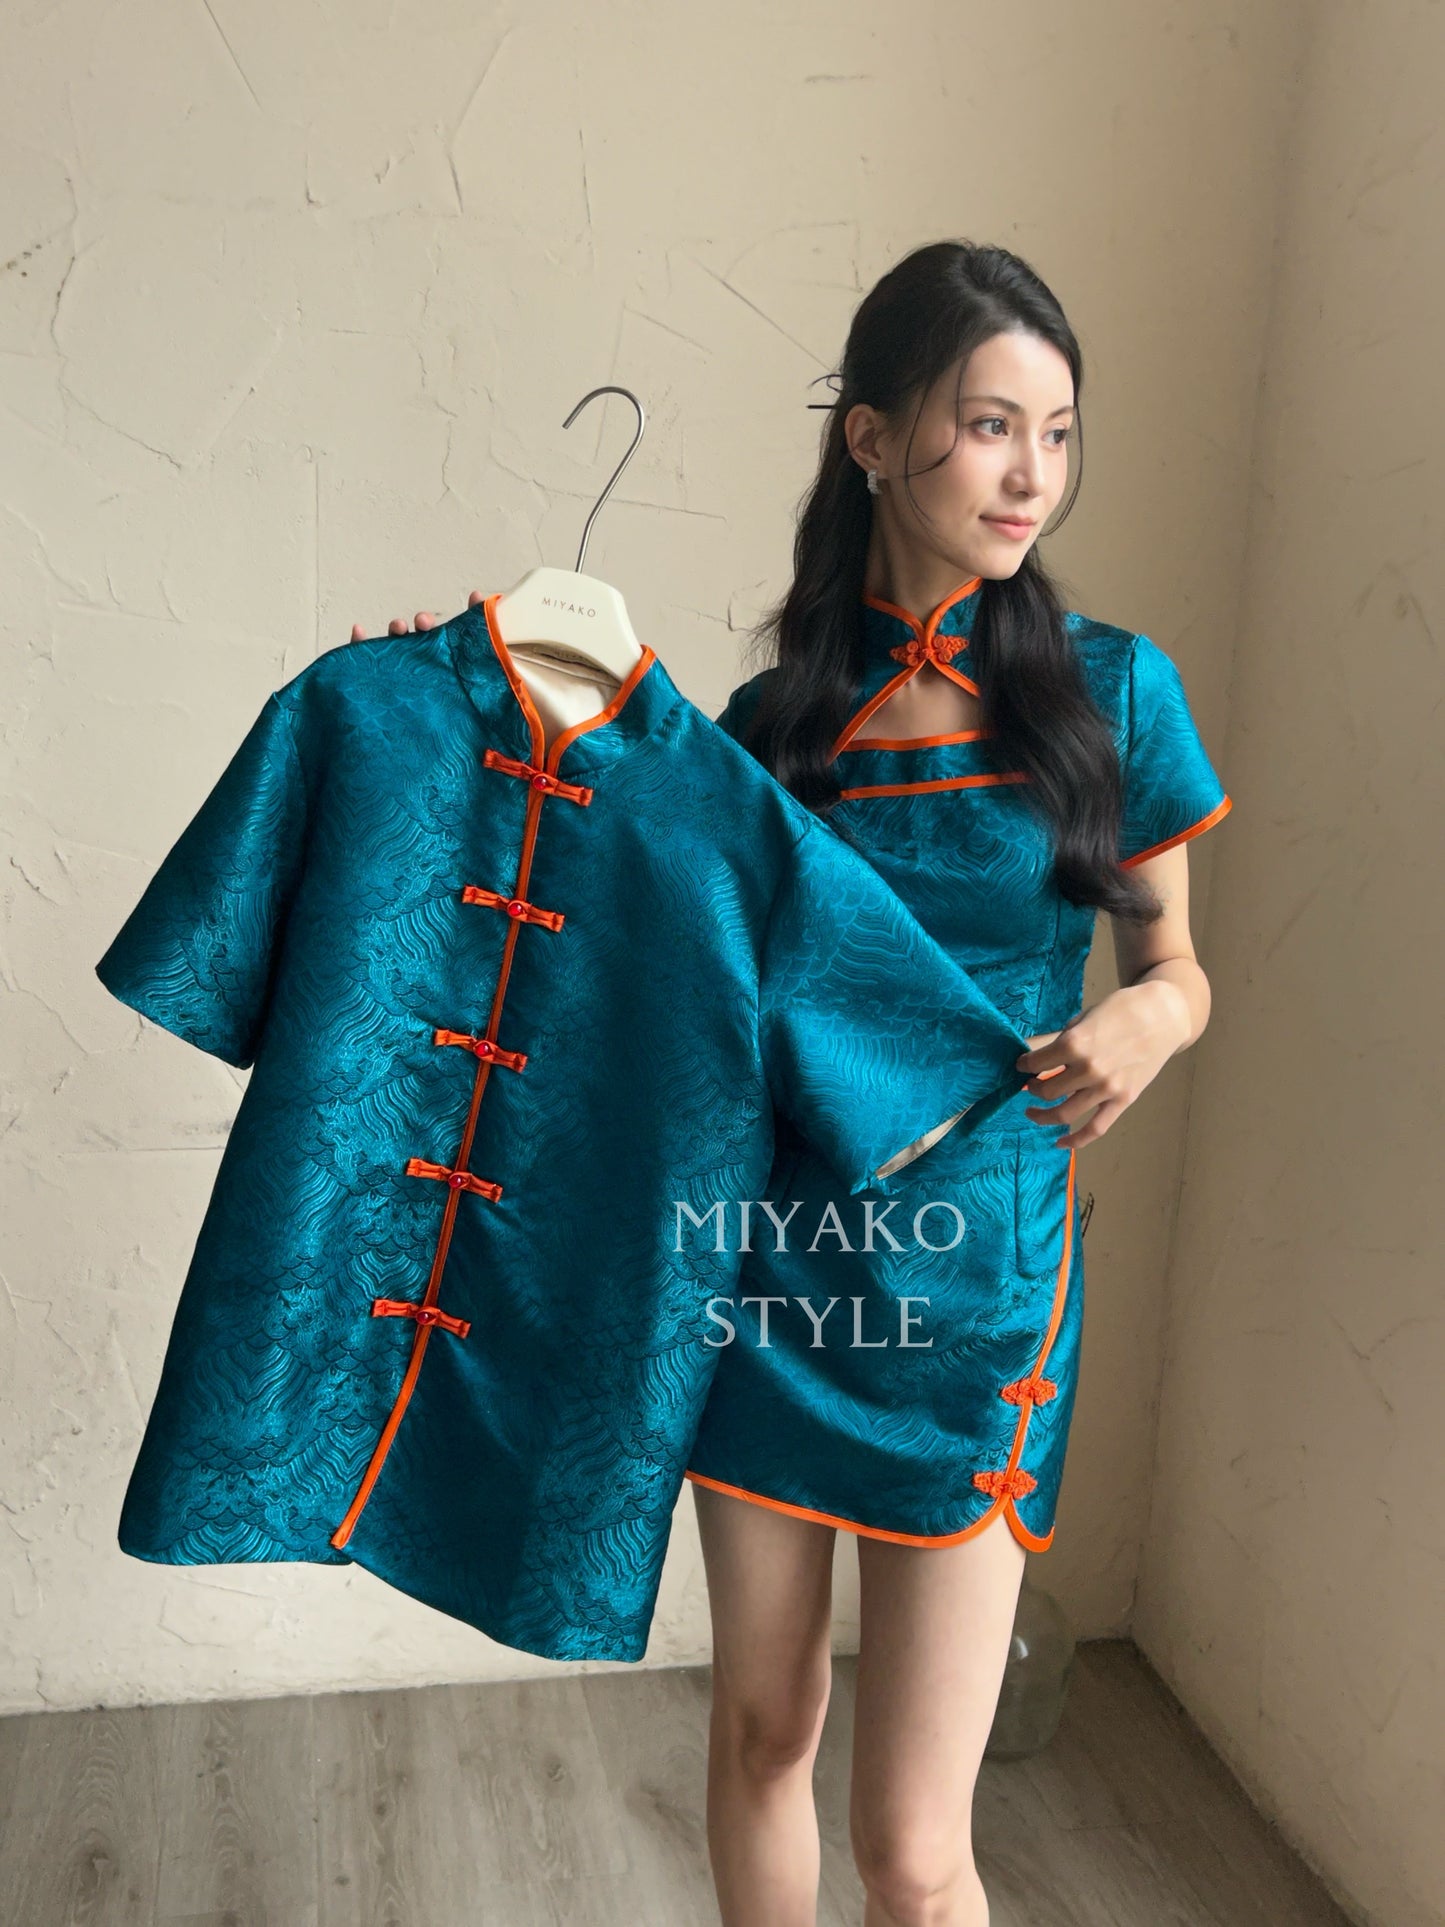 【龍華富貴】 Royal Cheongsam crop top in Peacock blue 孔雀蓝 (上衣 only)